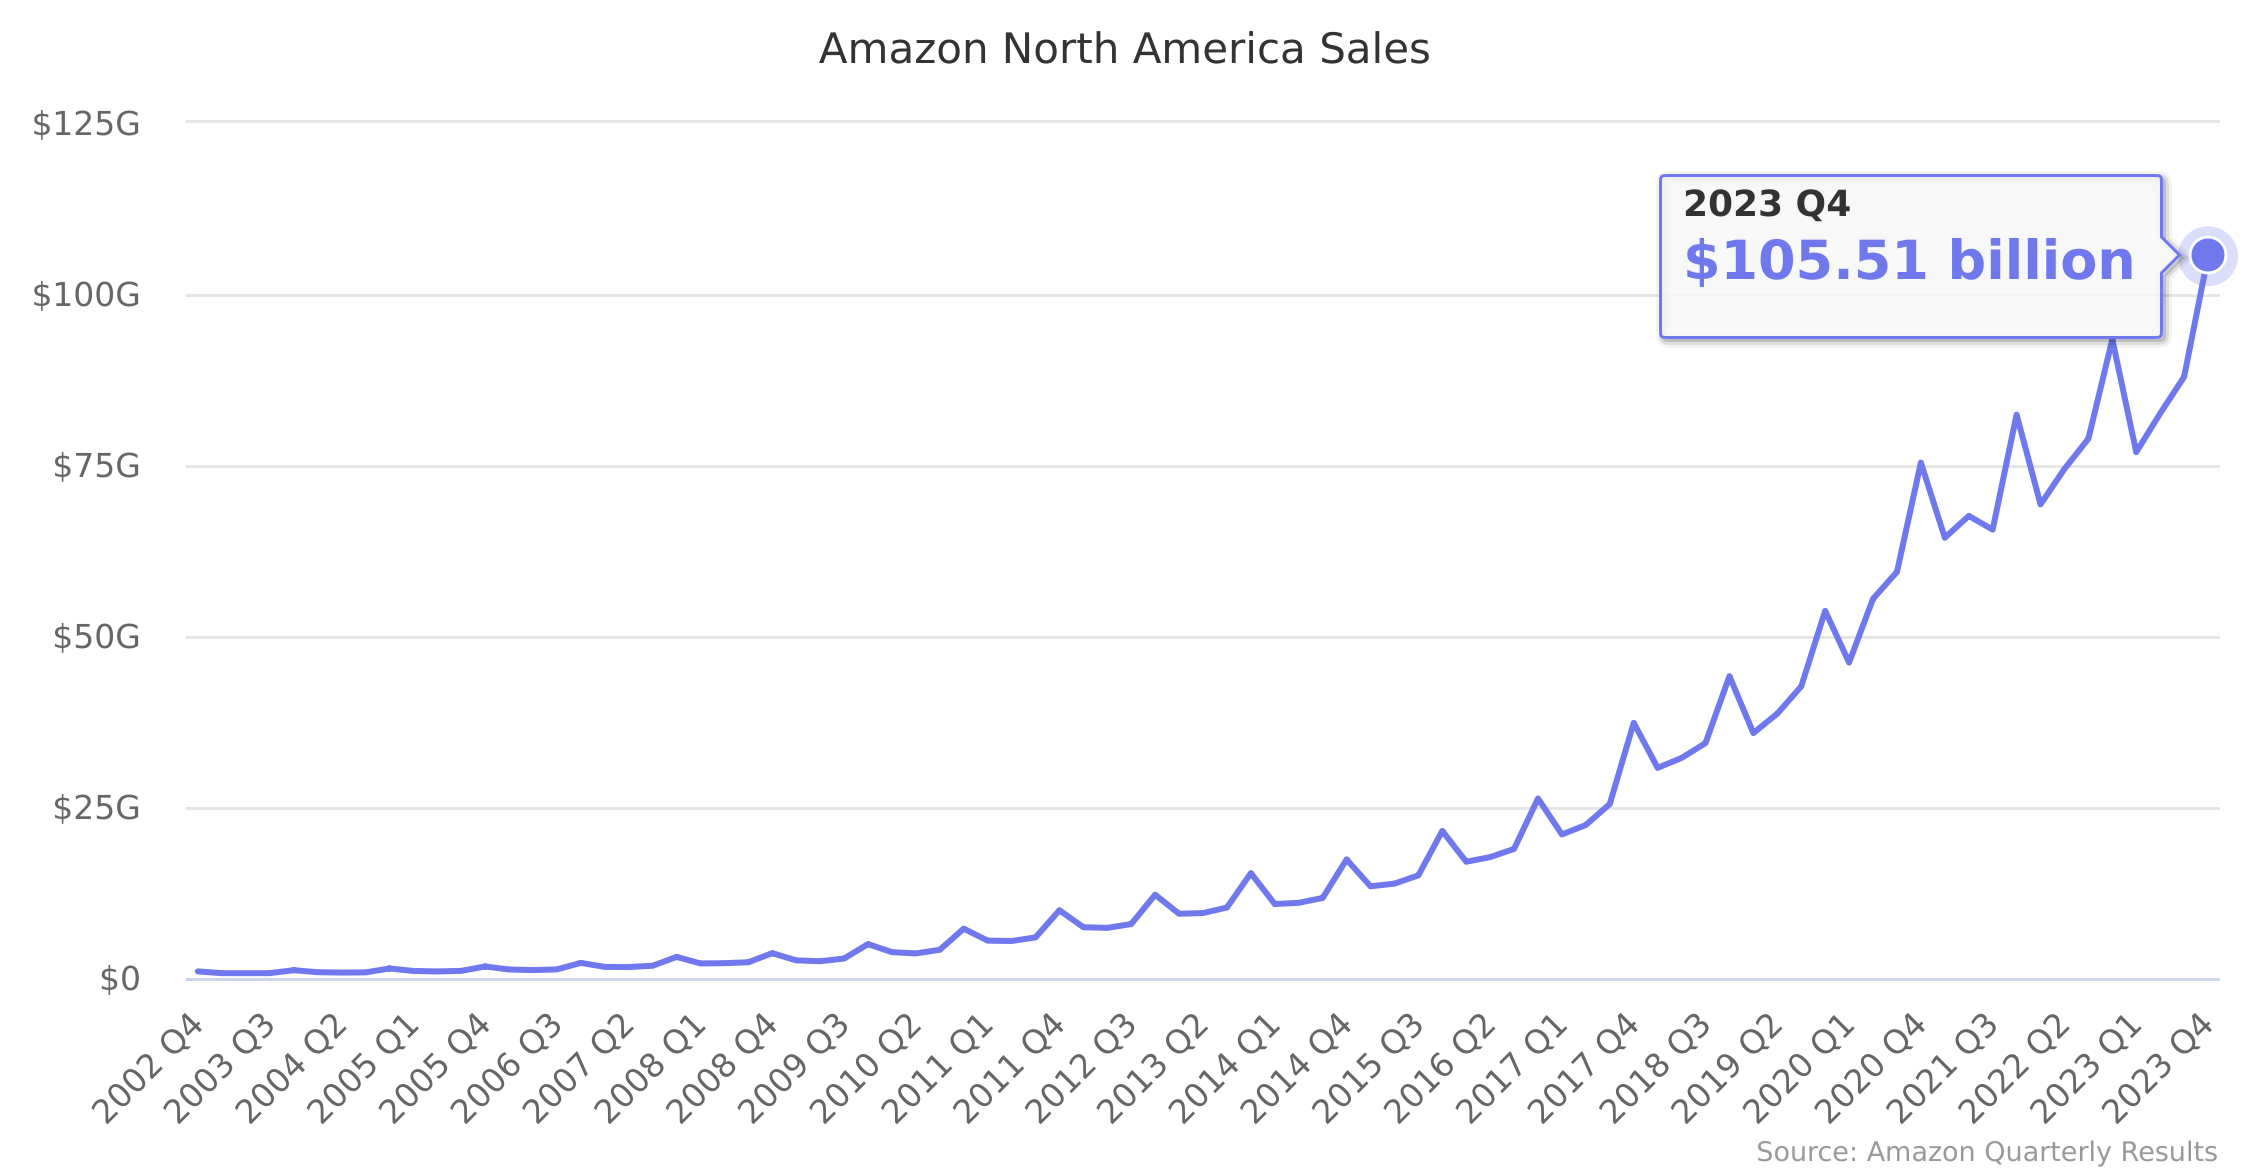 Amazon North America Sales